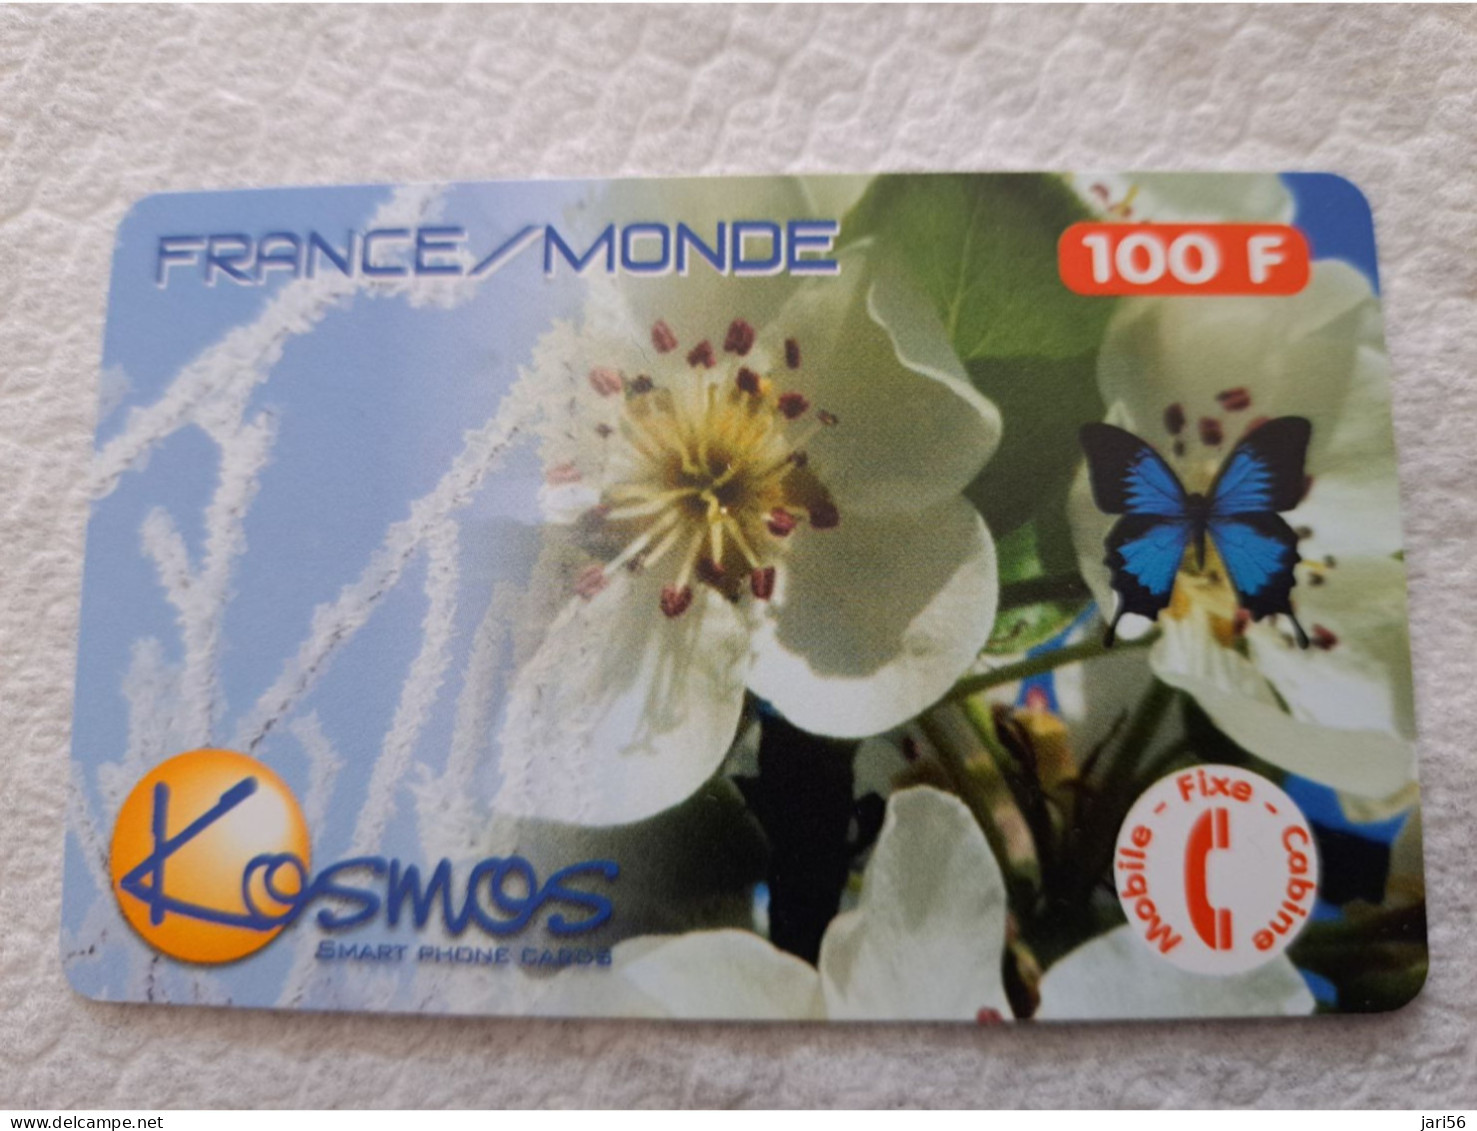 FRANCE/FRANKRIJK  100F// KOSMOS SMART/ FRANCE MONDE  /BUTTERFLY /FLOWER /   PREPAID  / USED   ** 14546** - Nachladekarten (Handy/SIM)